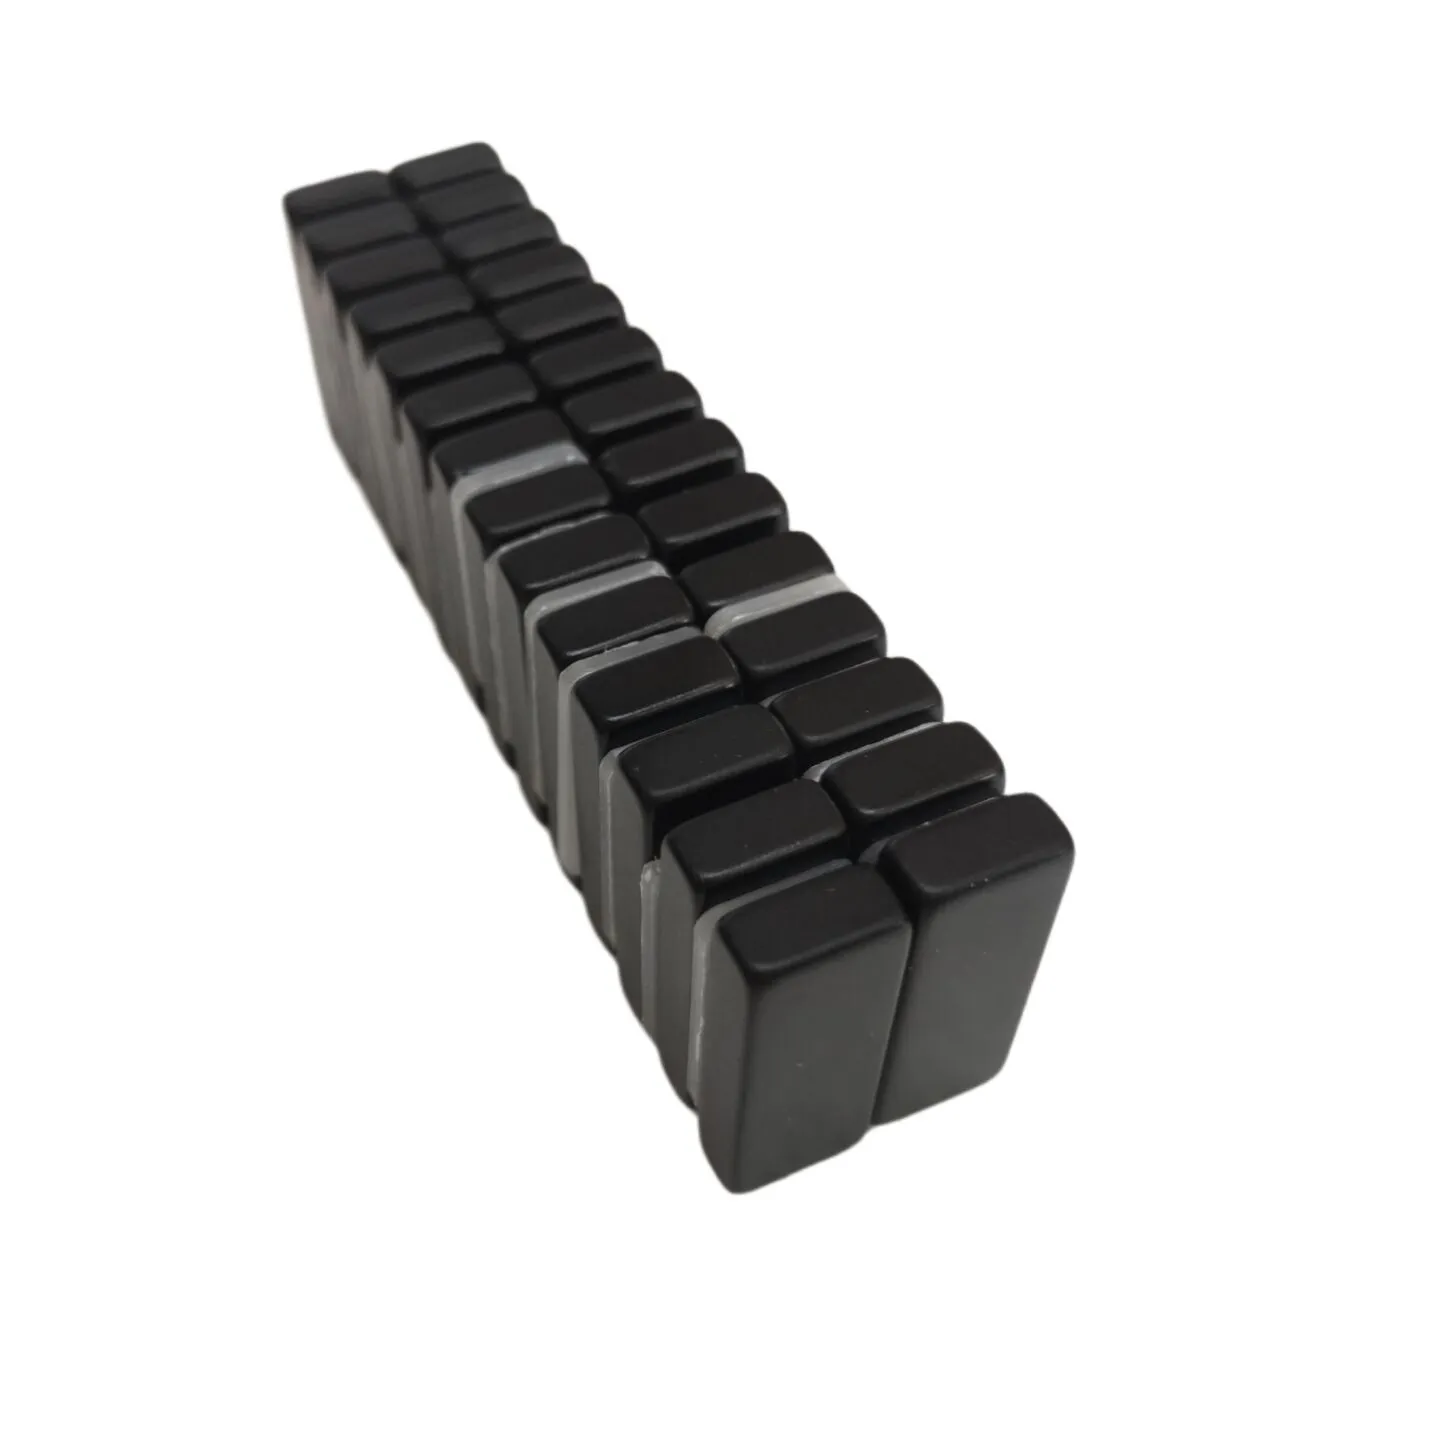 N38 Neodymium Magnet 25x10x5 Block Magnet with black Epoxy coating